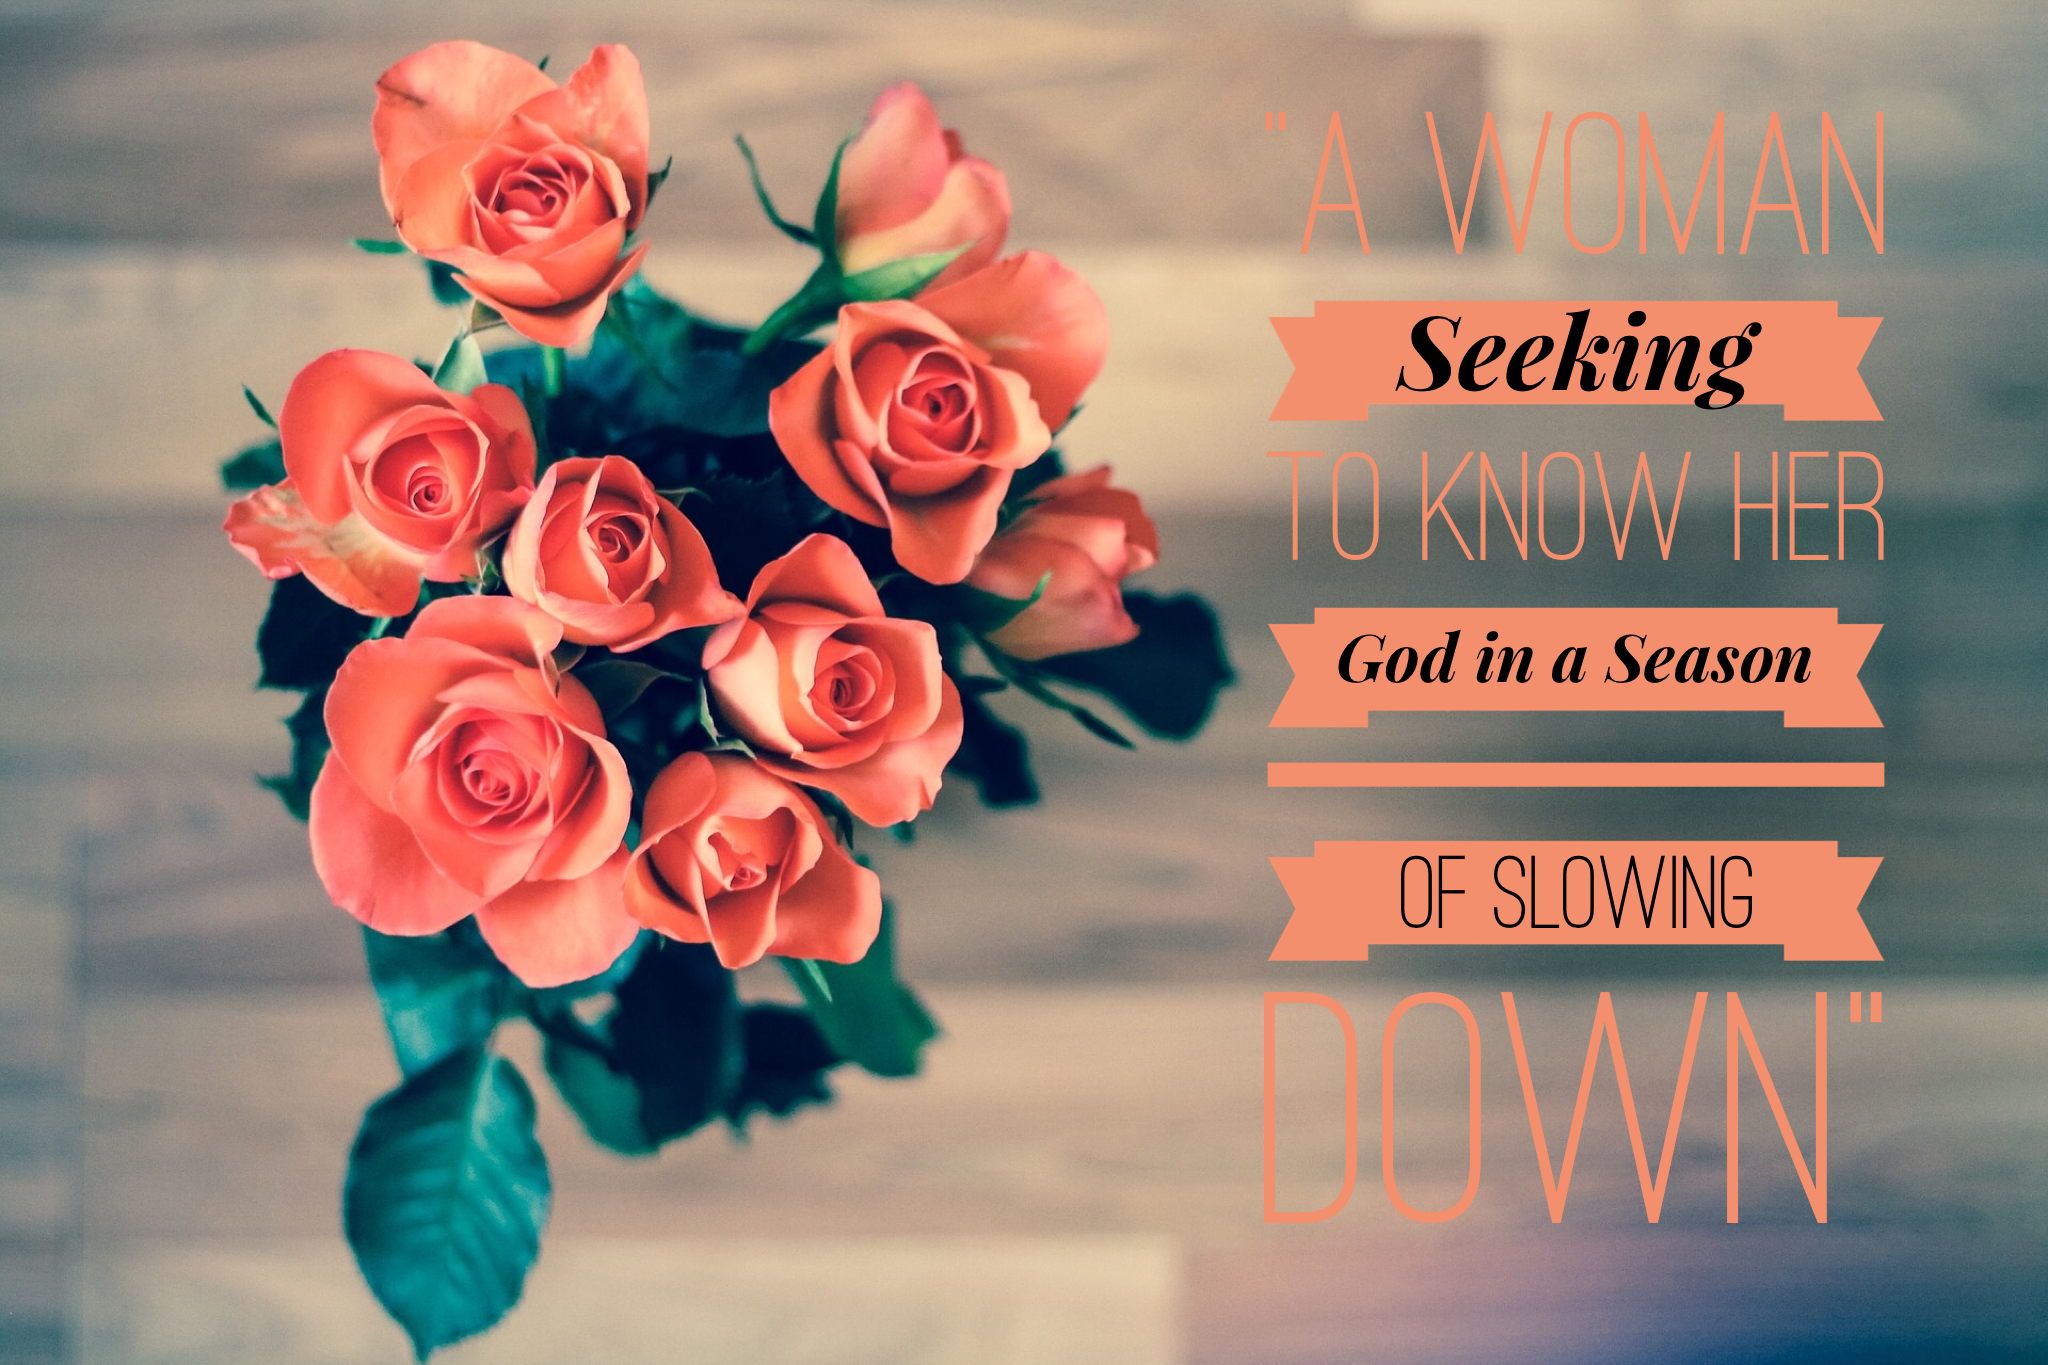 A Woman Seeking to Know Her God in a Season of Slowing Down | www.codyandras.com/blog/2017/9/6/a-woman-seeking-to-know-her-god-in-a-season-of-slowing-down